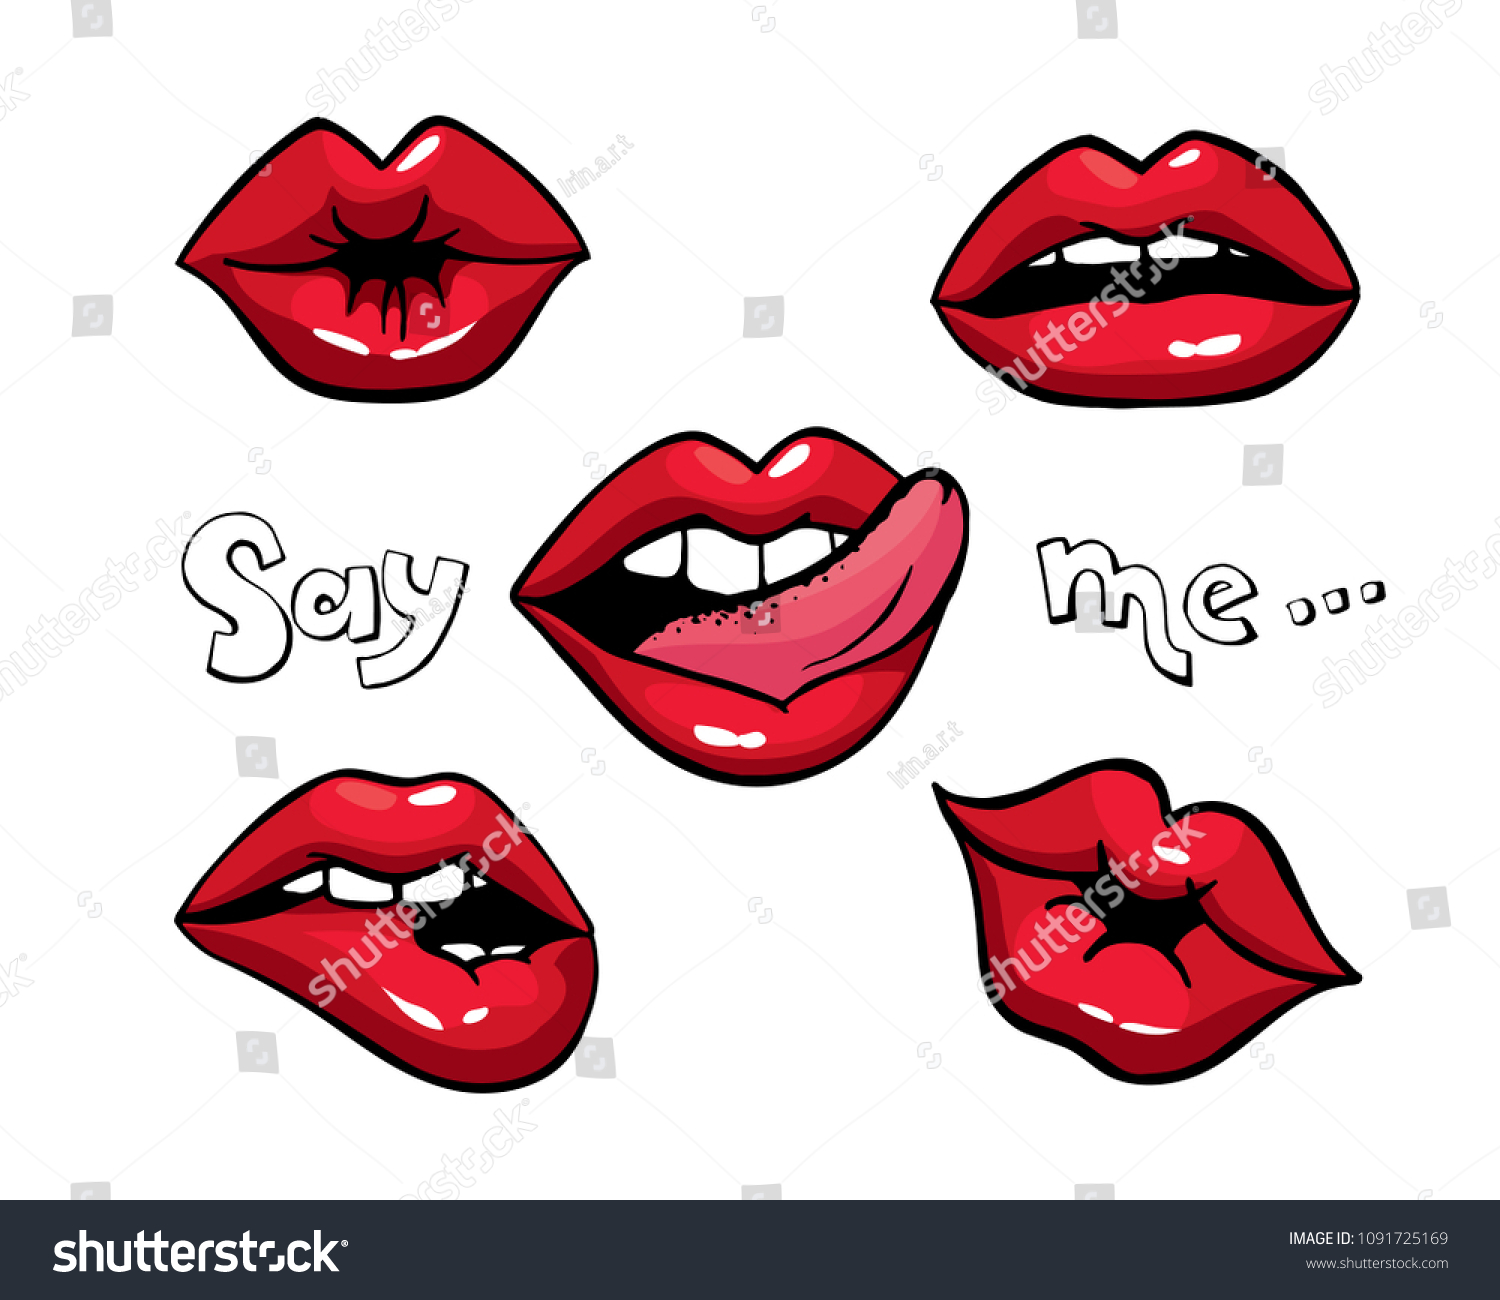 Lipsパッチコレクション 笑顔 キス 口の半開き 噛む唇 唇をなめる 舌を出すなど 異なる感情を表すセクシーな落書き風女性の唇のベクターイラスト 白い背景に セックス のベクター画像素材 ロイヤリティフリー